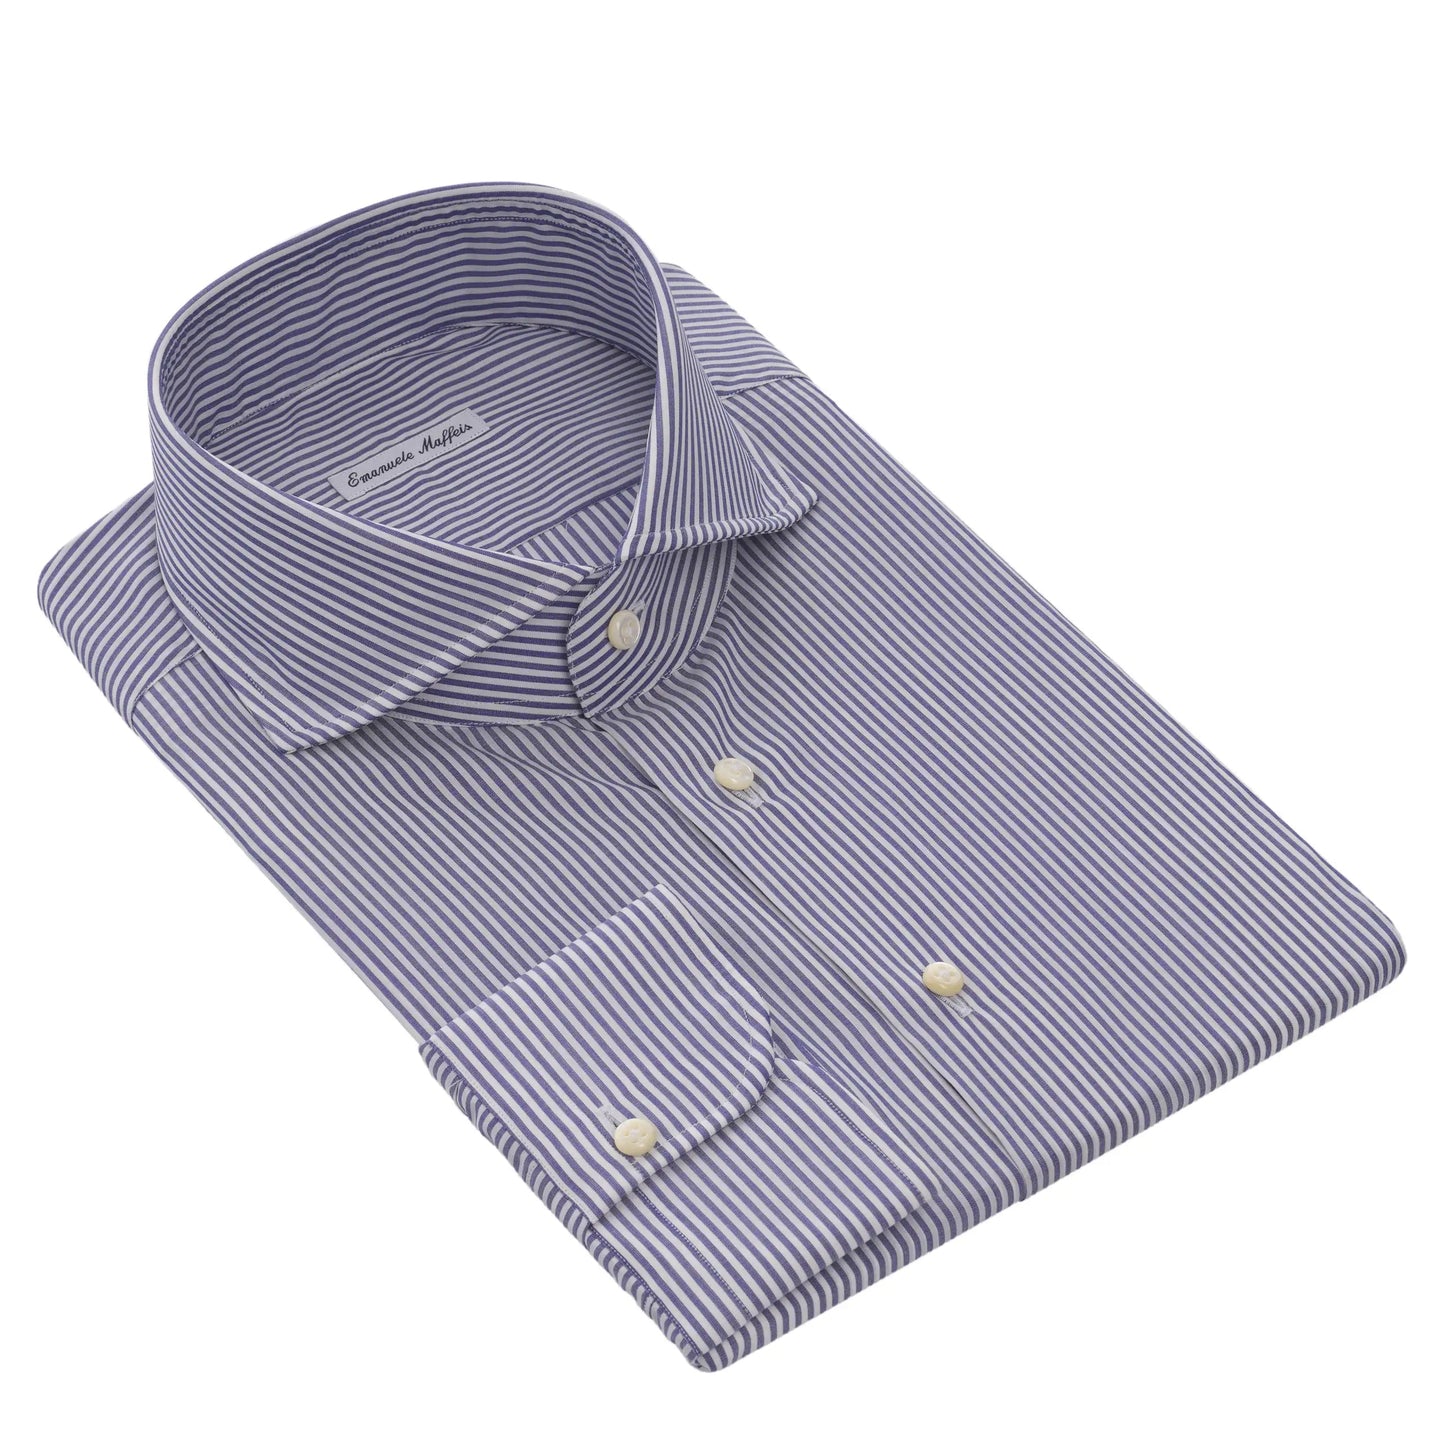 Emanuele Maffeis Classic Cotton Striped Blue Shirt - SARTALE